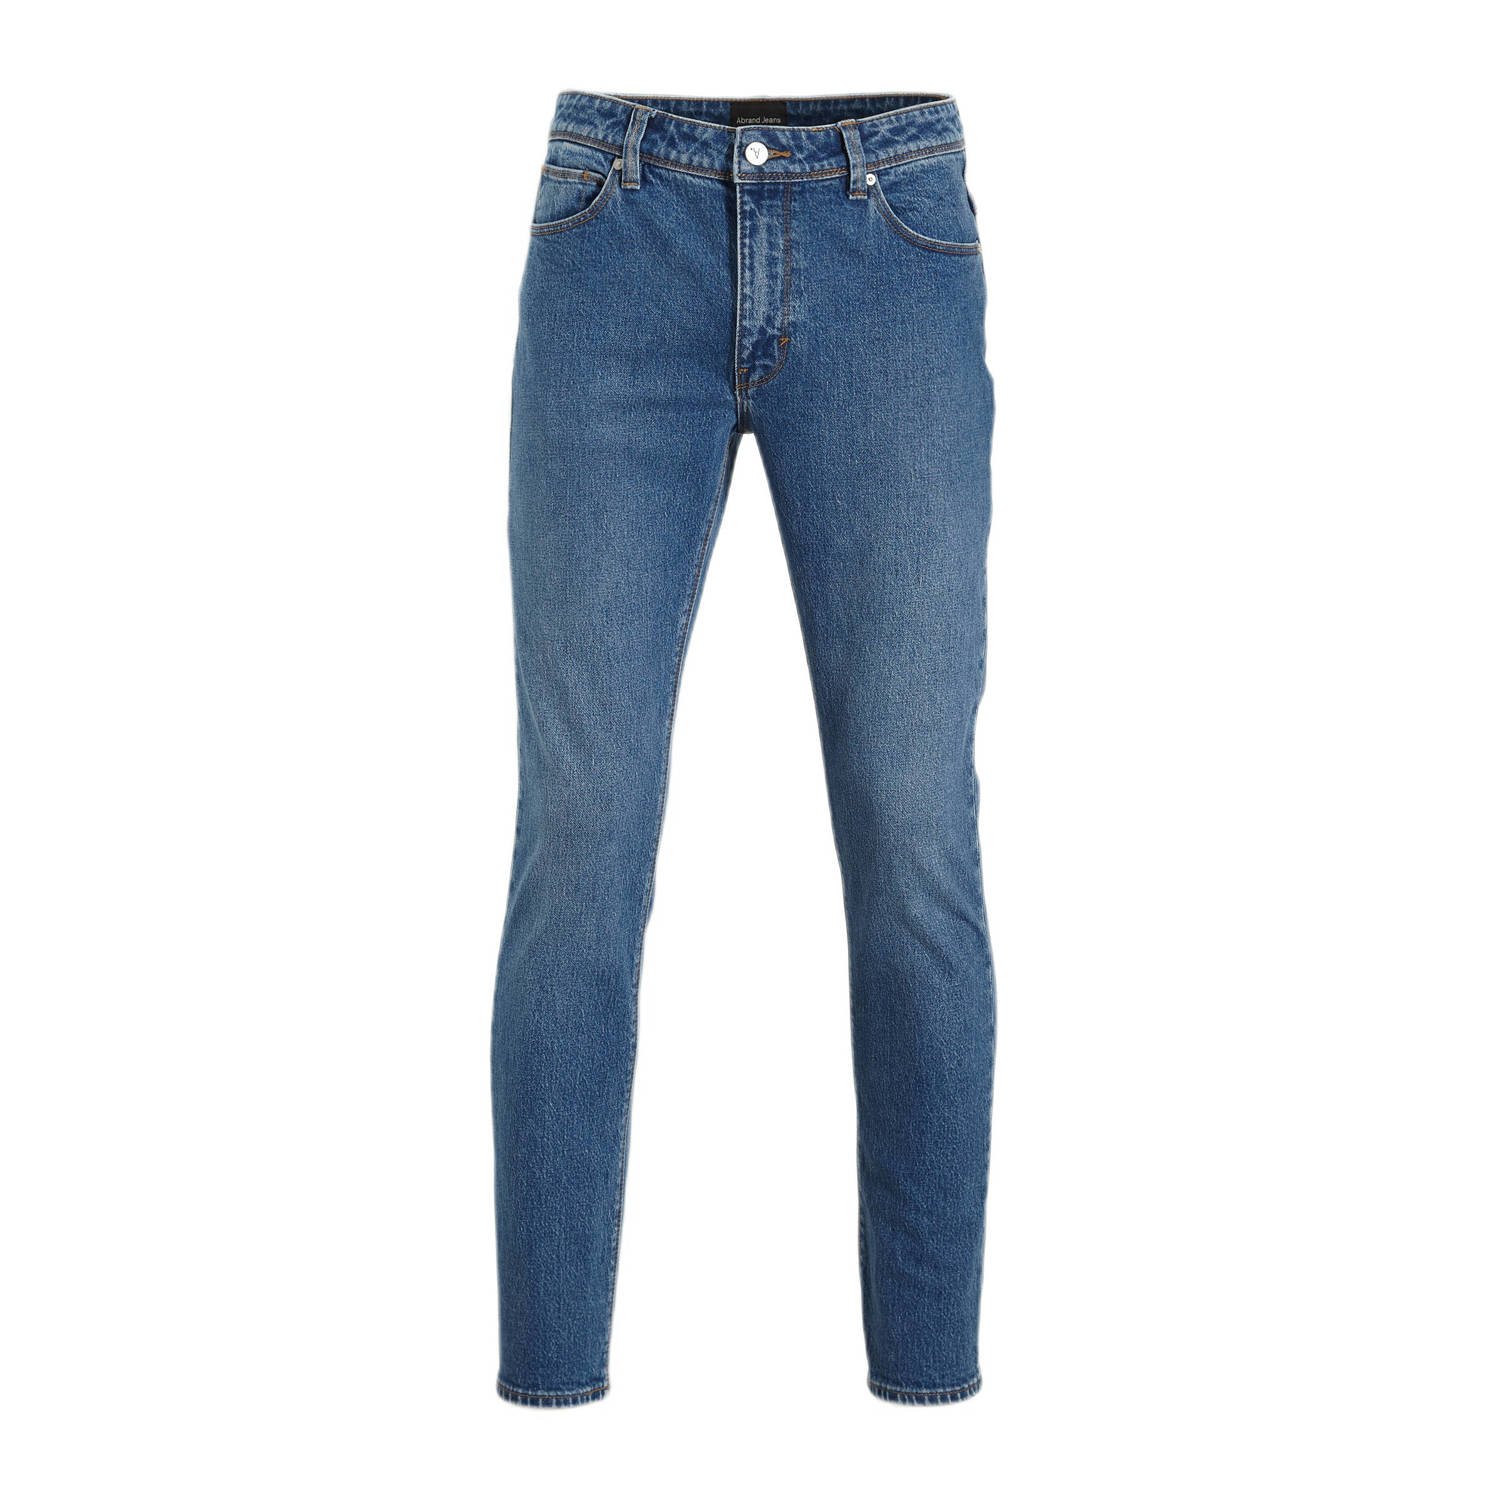 Abrand Jeans slim fit jeans DAILY OPERATI dark vintage indigo